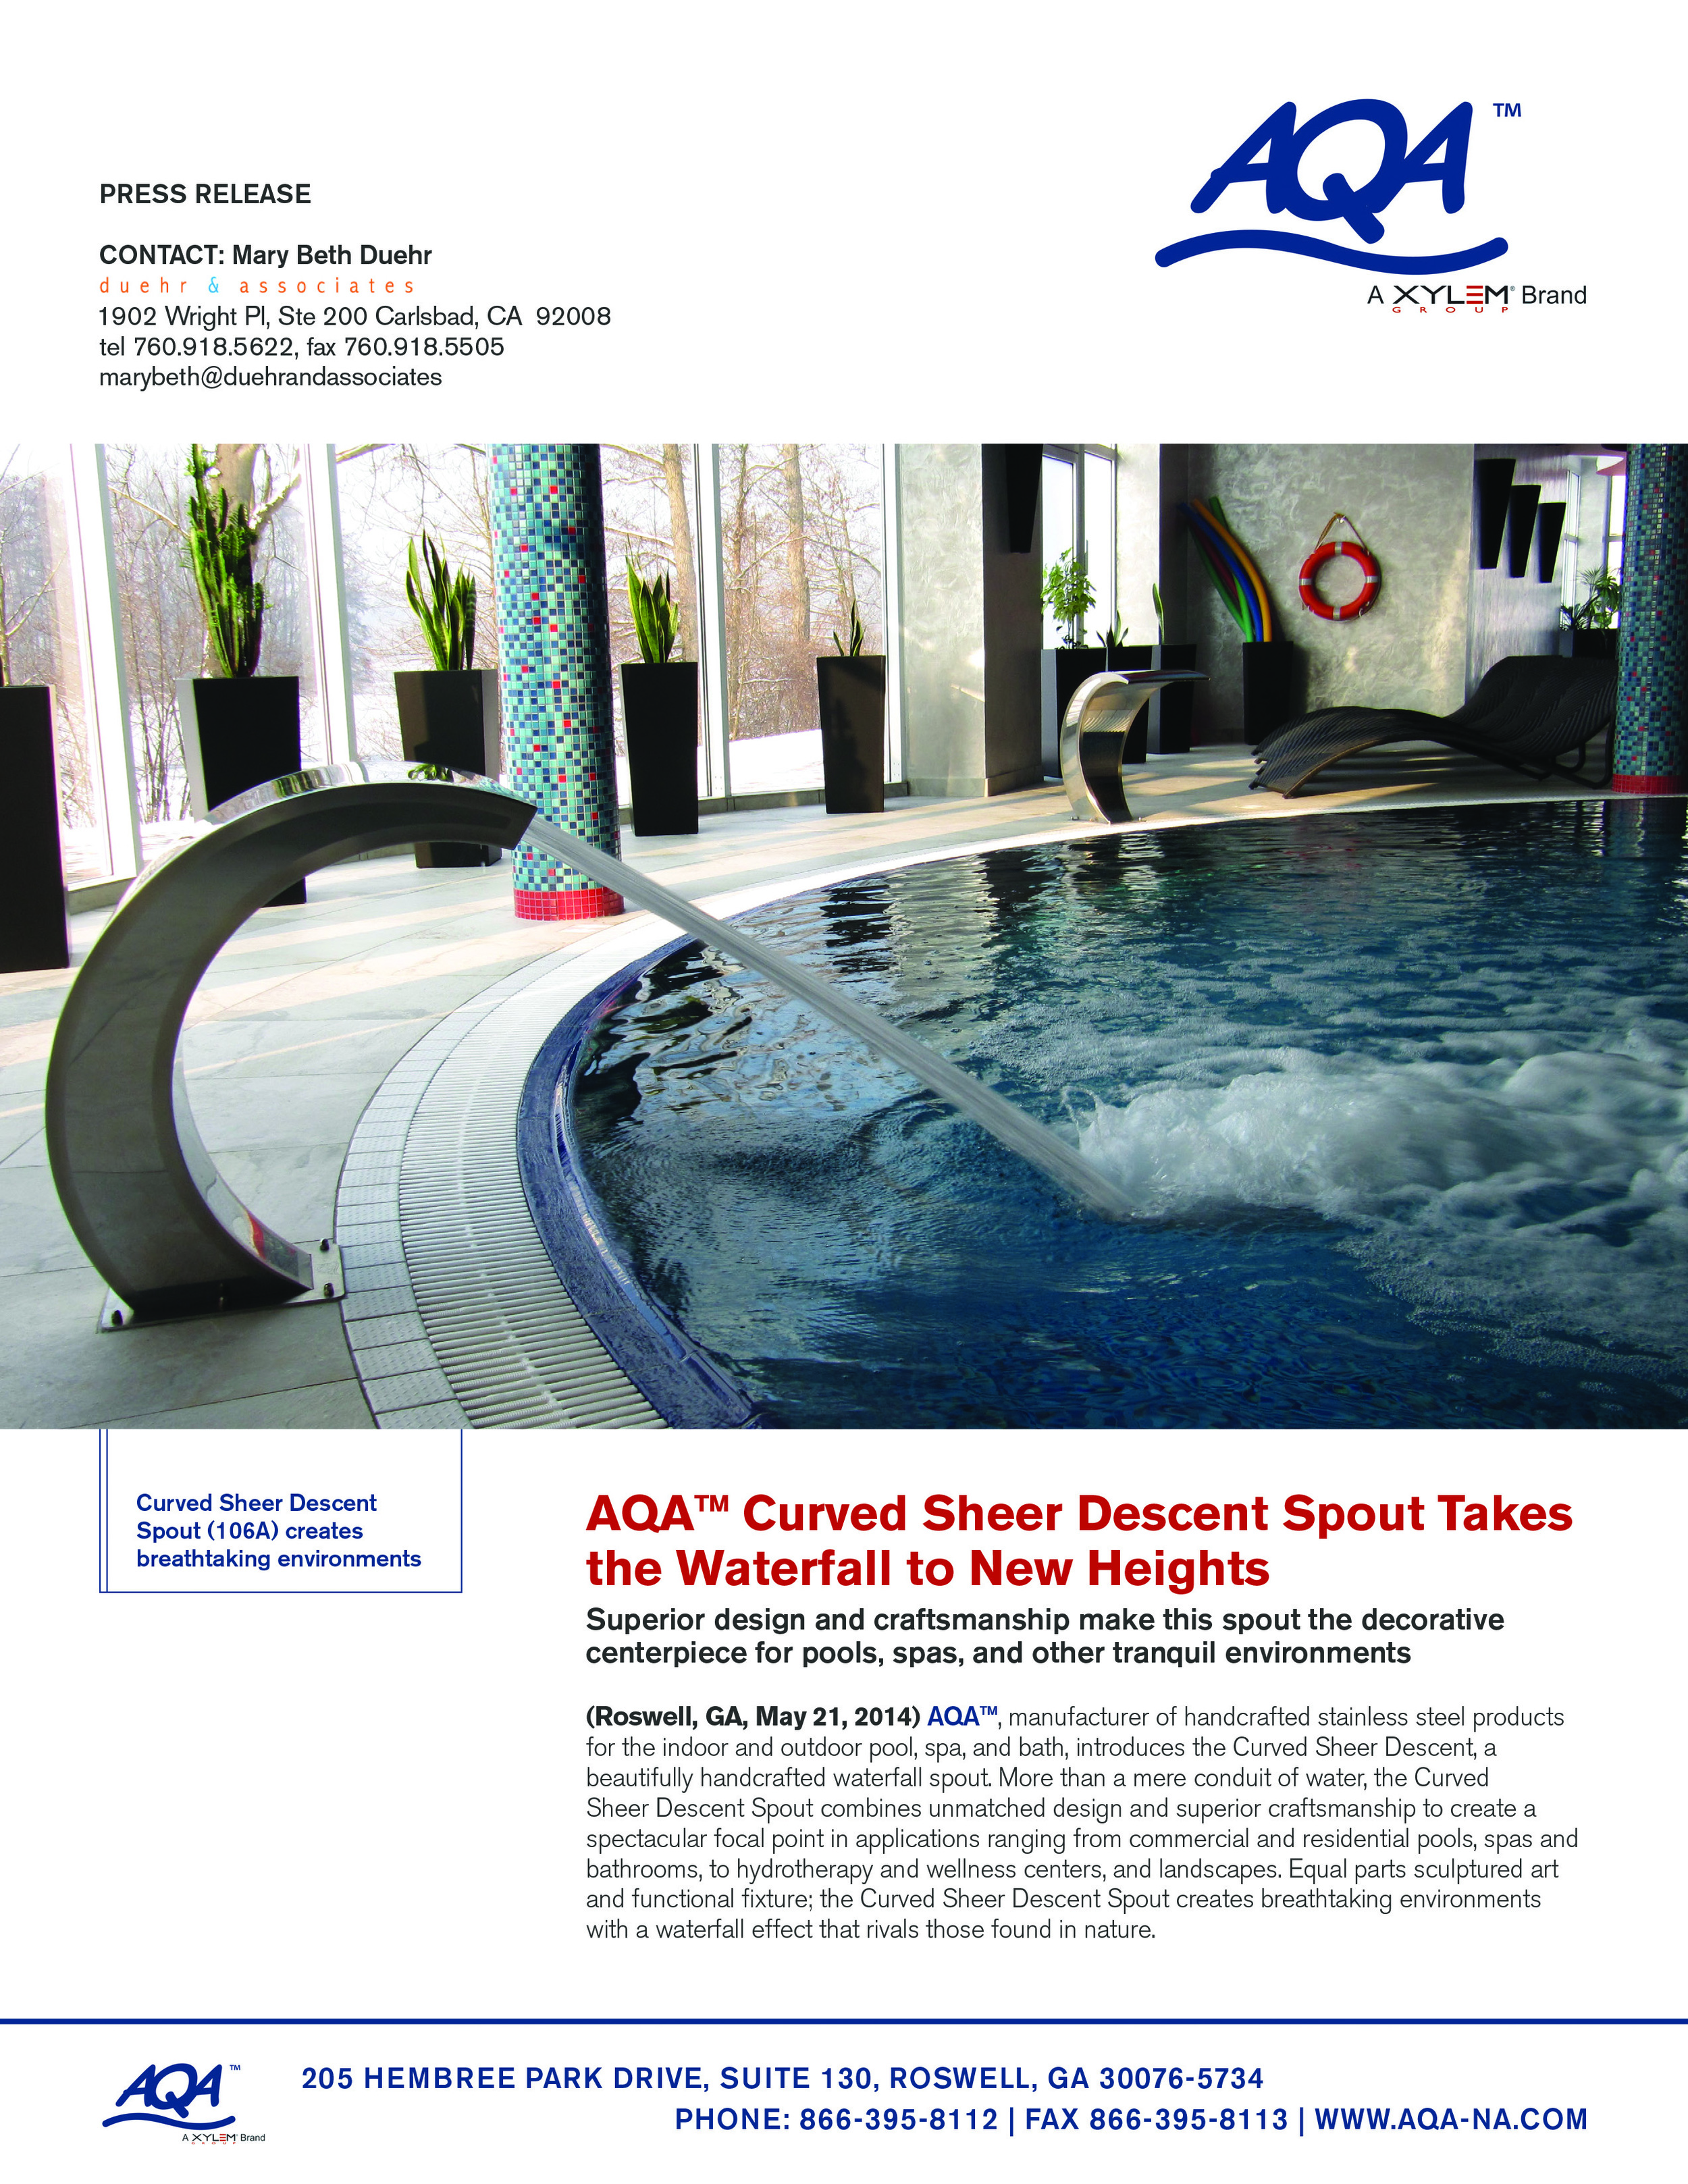 AQA Curved Sheer Descent Spout-1.jpg